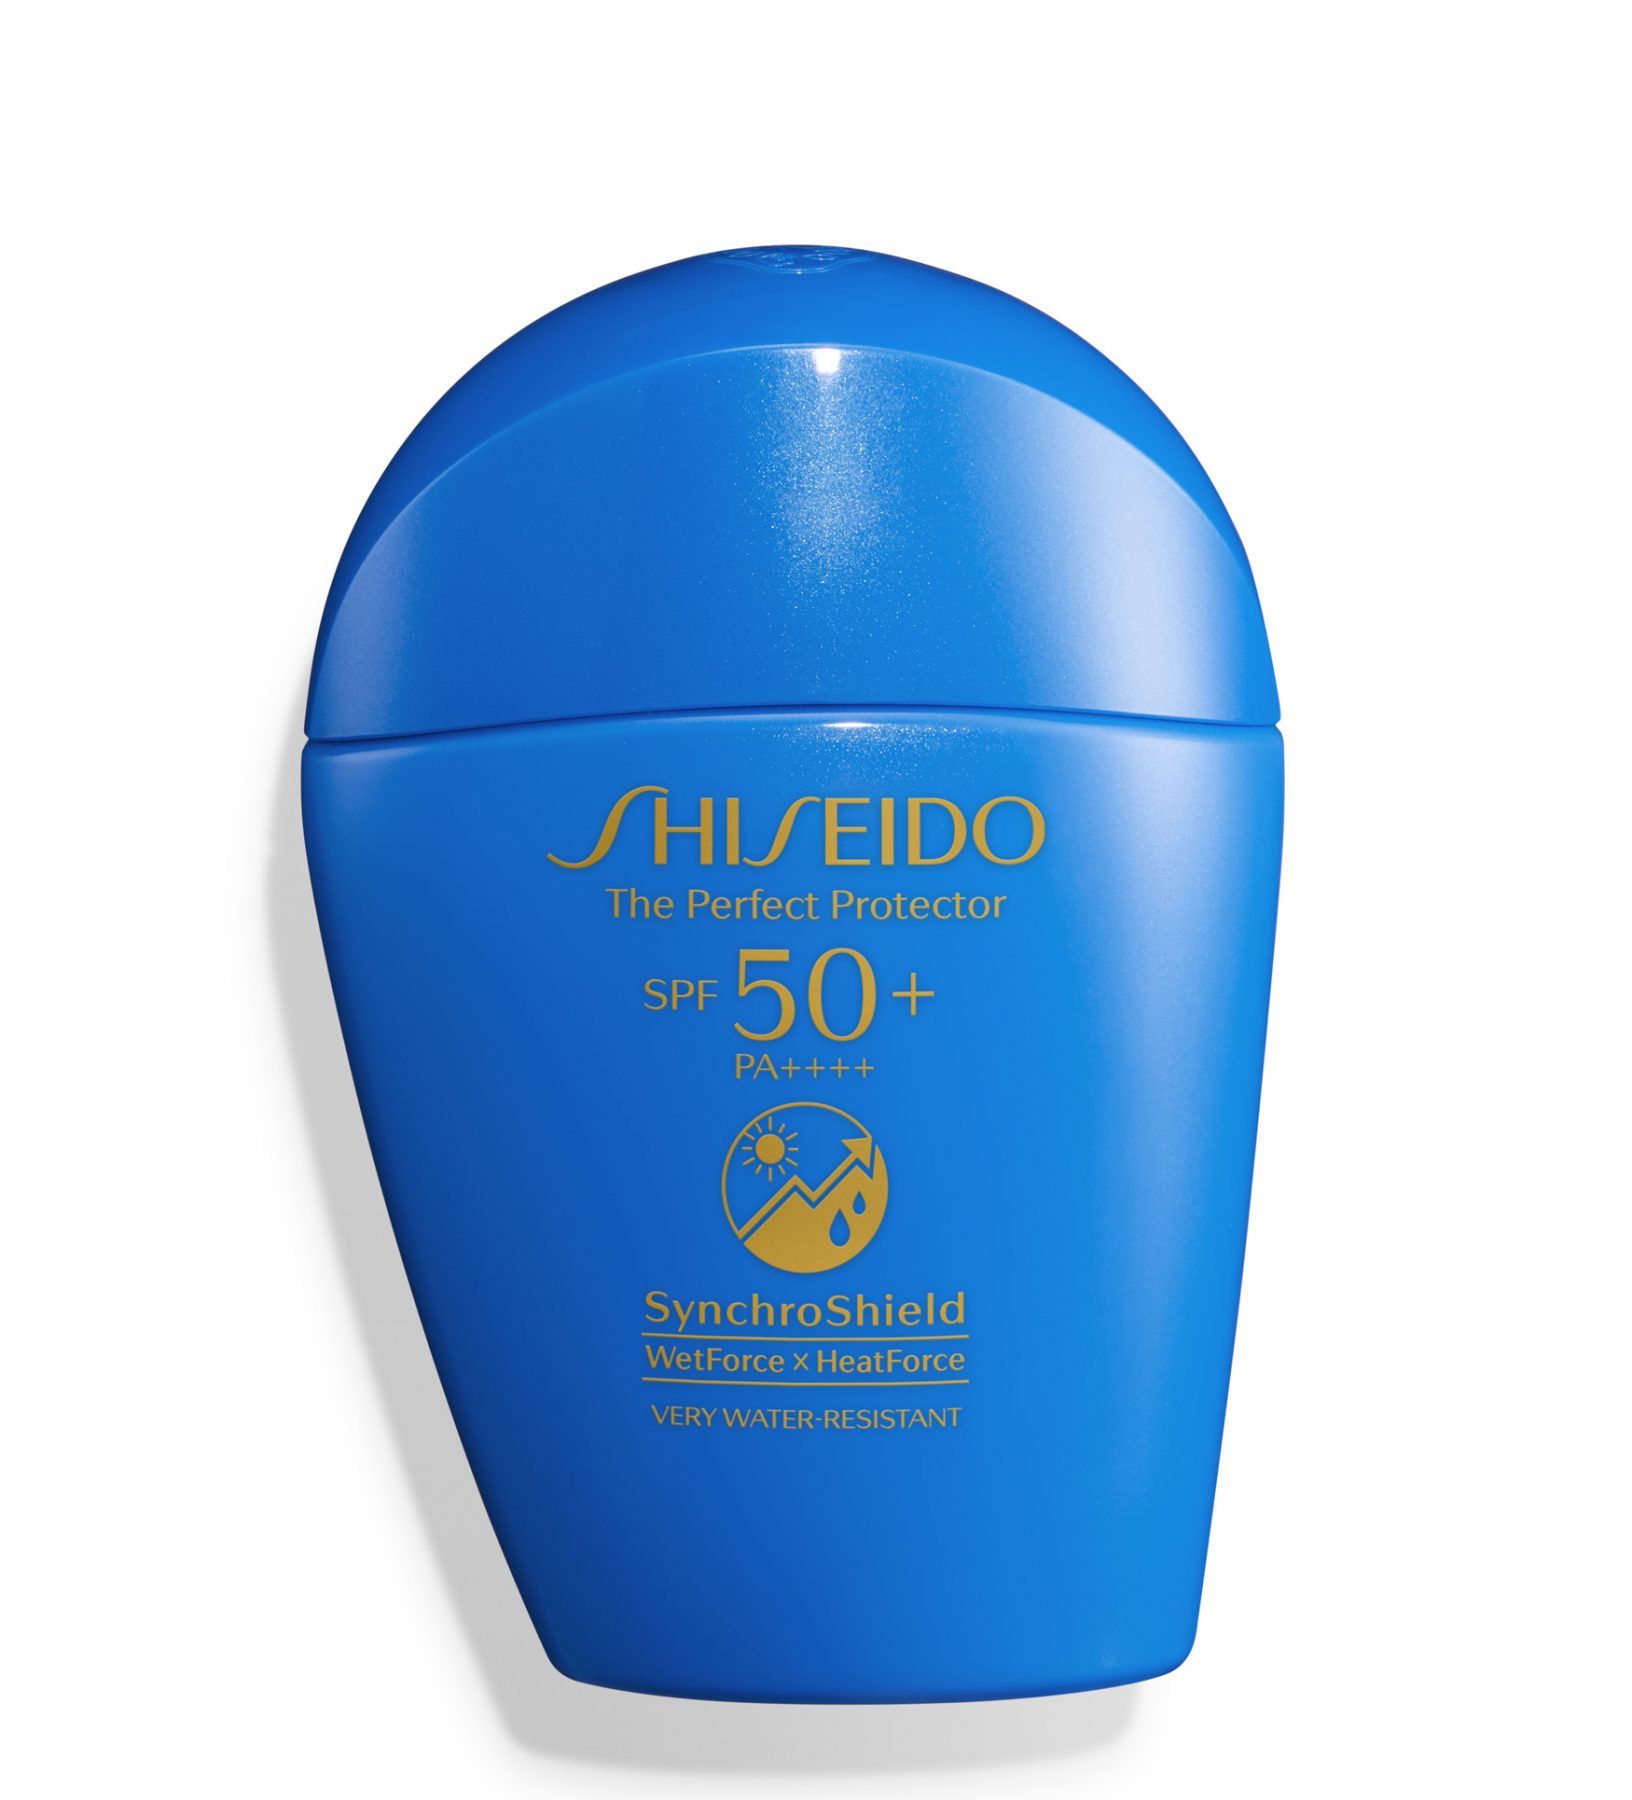 Shiseido 50. СПФ Shiseido Expert Sun Protector. Шисейдо SPF 50. Шисейдо крем СПФ 50. Shiseido Sun Protection spf50.